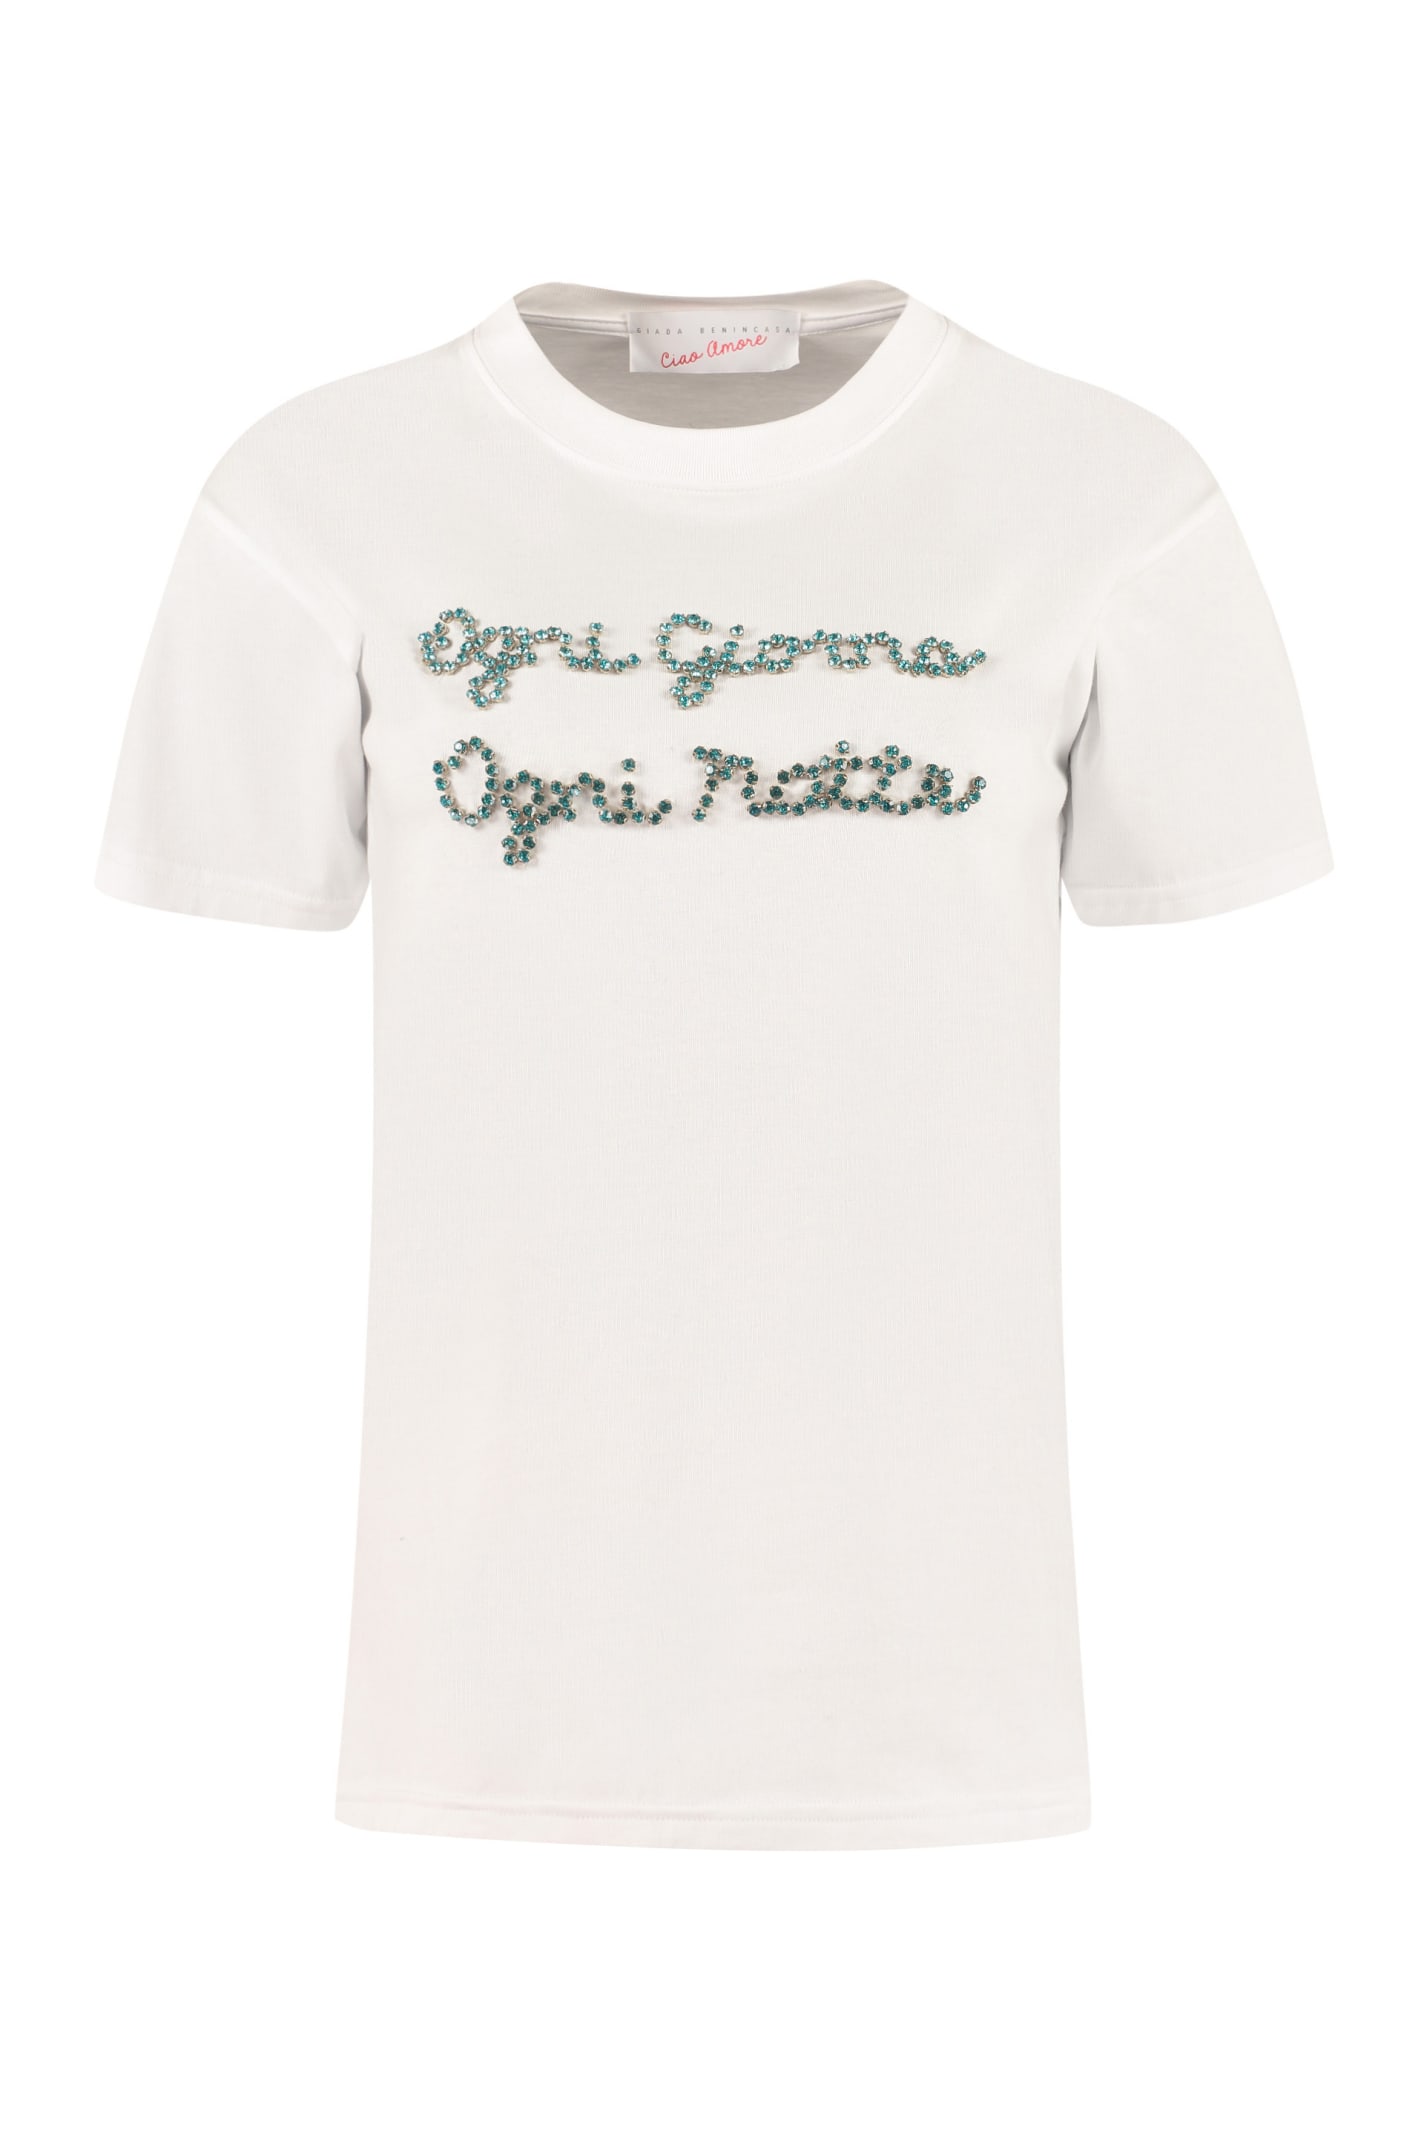 Giada Benincasa Embellished Cotton T-shirt